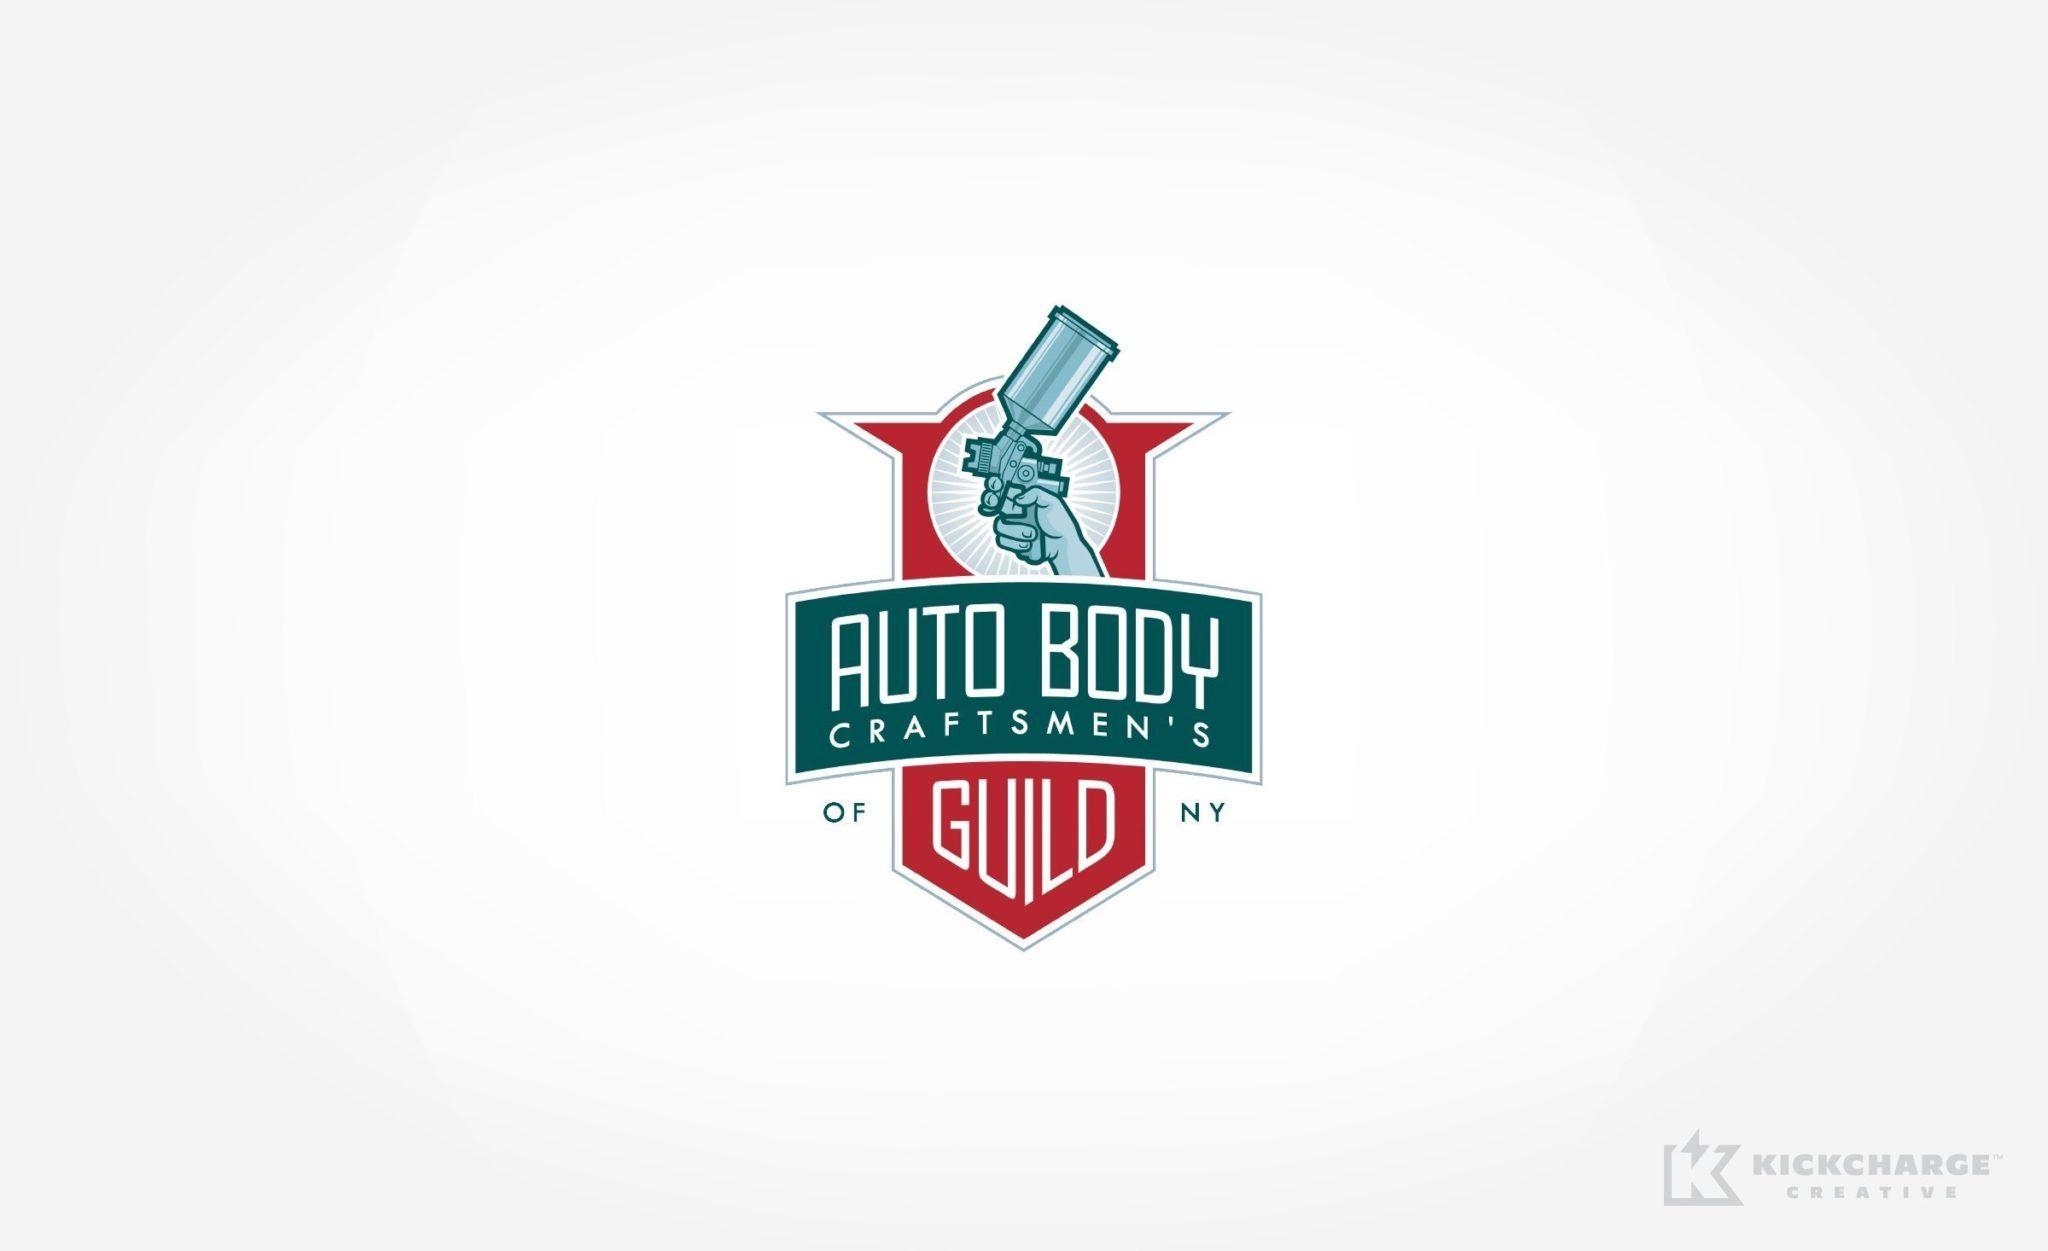 Craftsmen Logo - Auto Body Craftsmen's Guild - KickCharge Creative | kickcharge.com ...